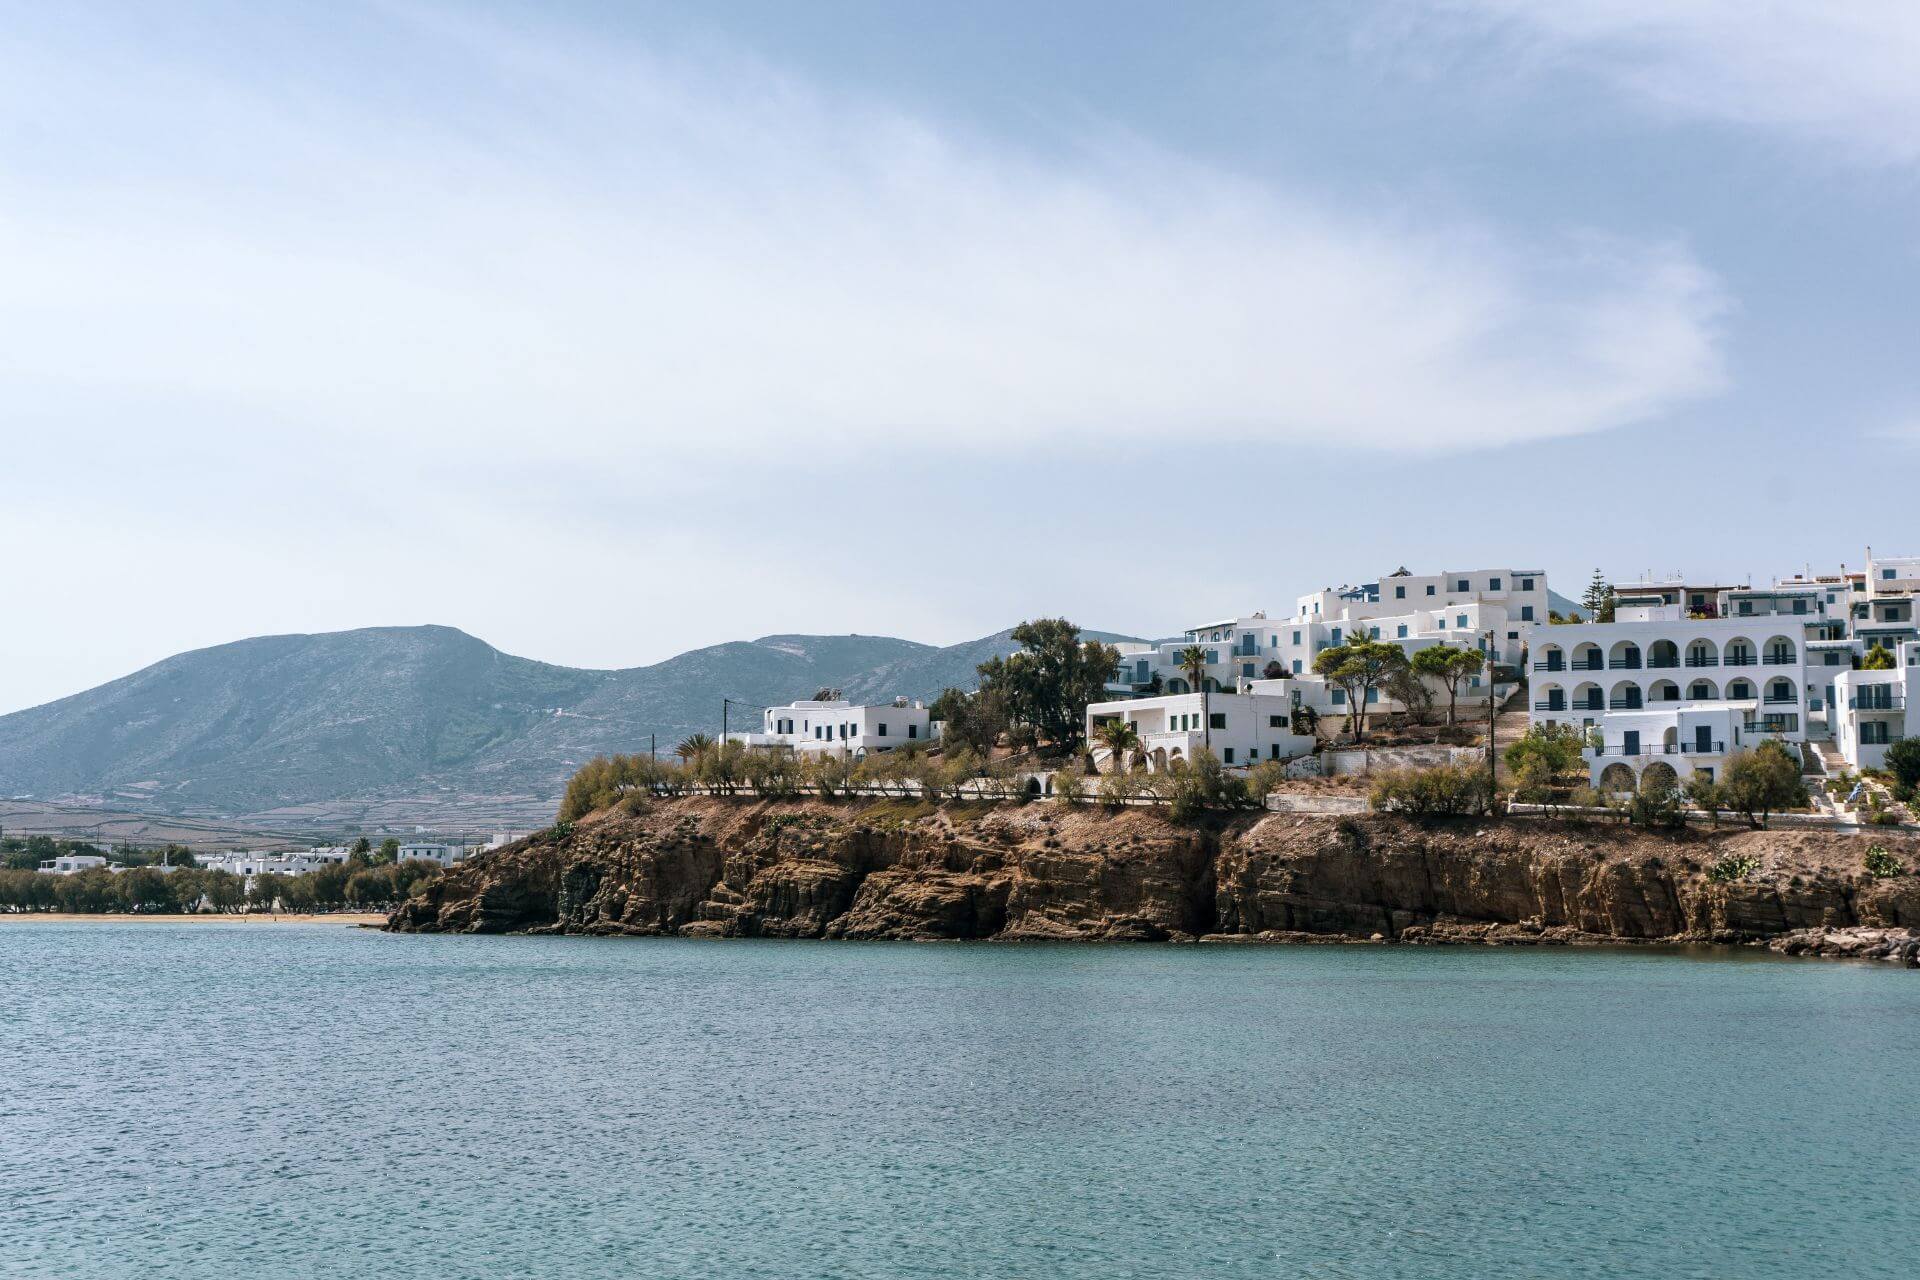 Residence in Greece